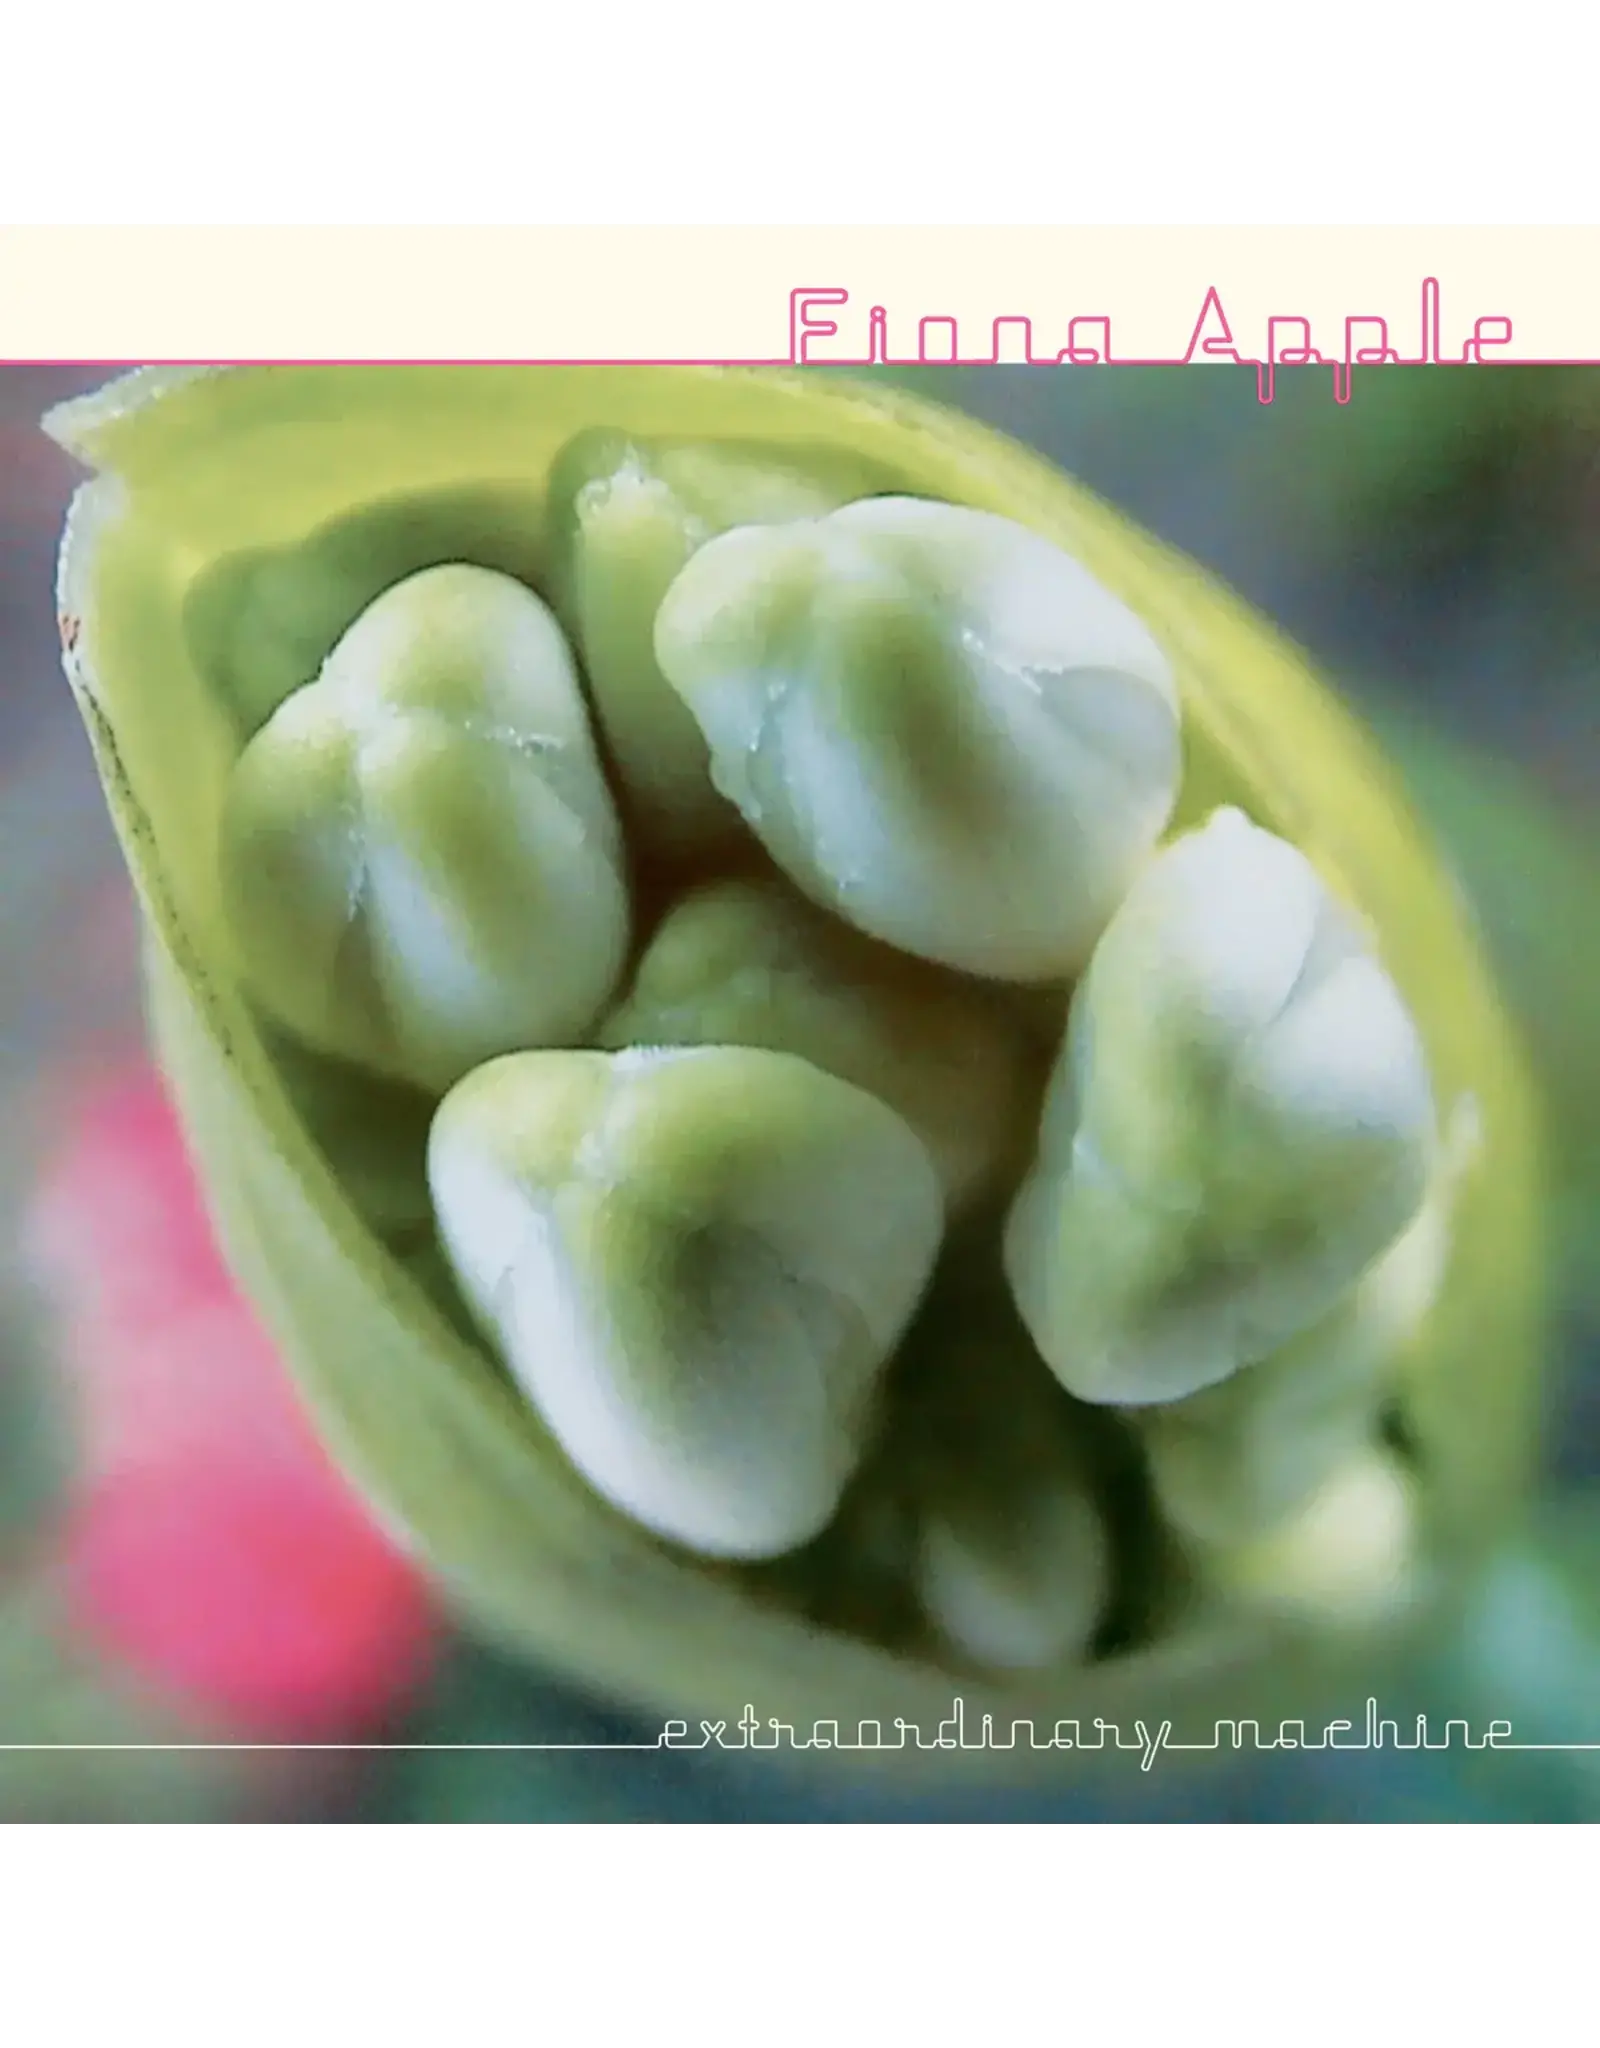 Fiona Apple - Extraordinary Machine (Vinyl LP)